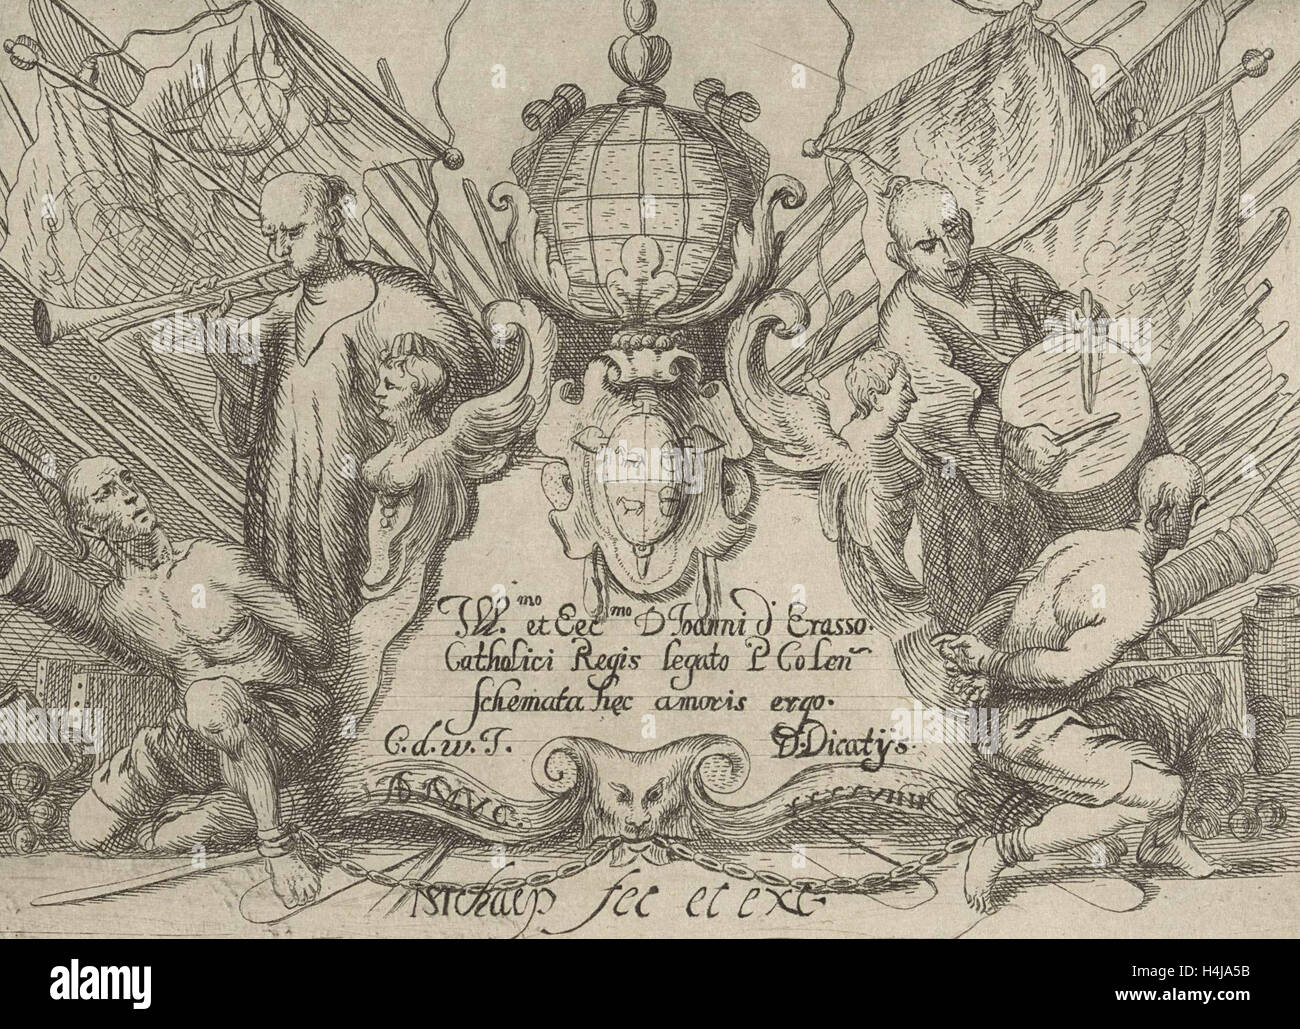 Gli schiavi e asiatica di figure su entrambi i lati di una cartuccia, M. Schaep, T. D. Dicatys, 1649 Foto Stock